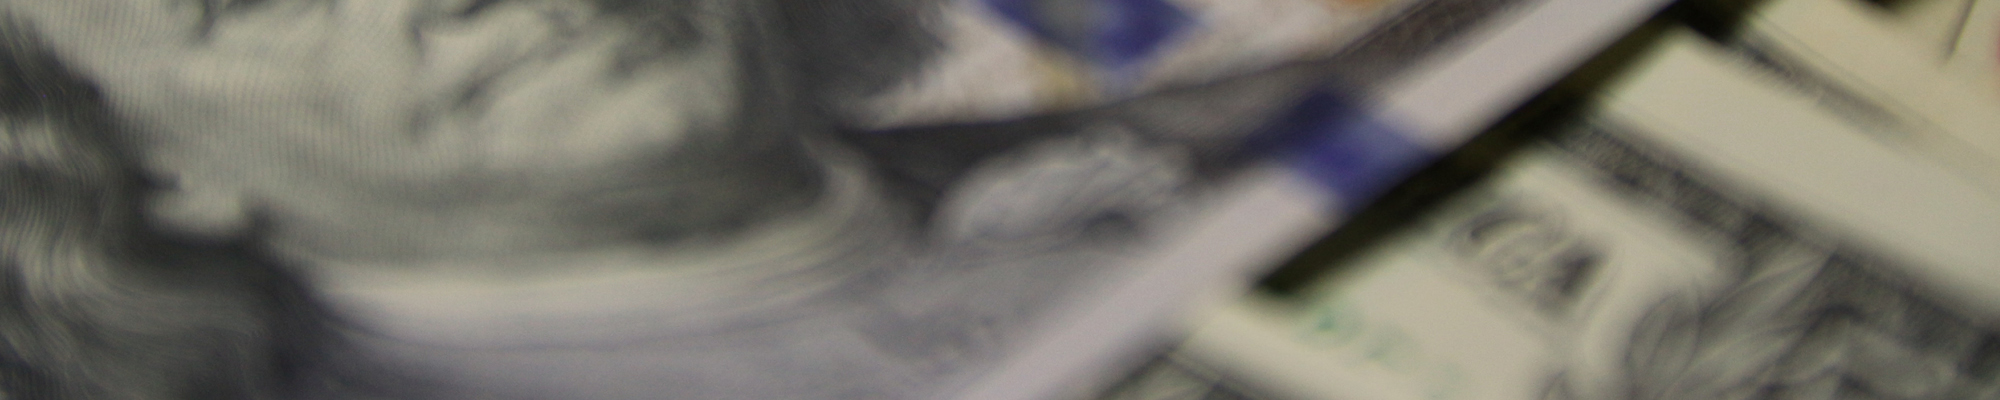 Close up of one hundred dollar bill showing Benjamin Franklin